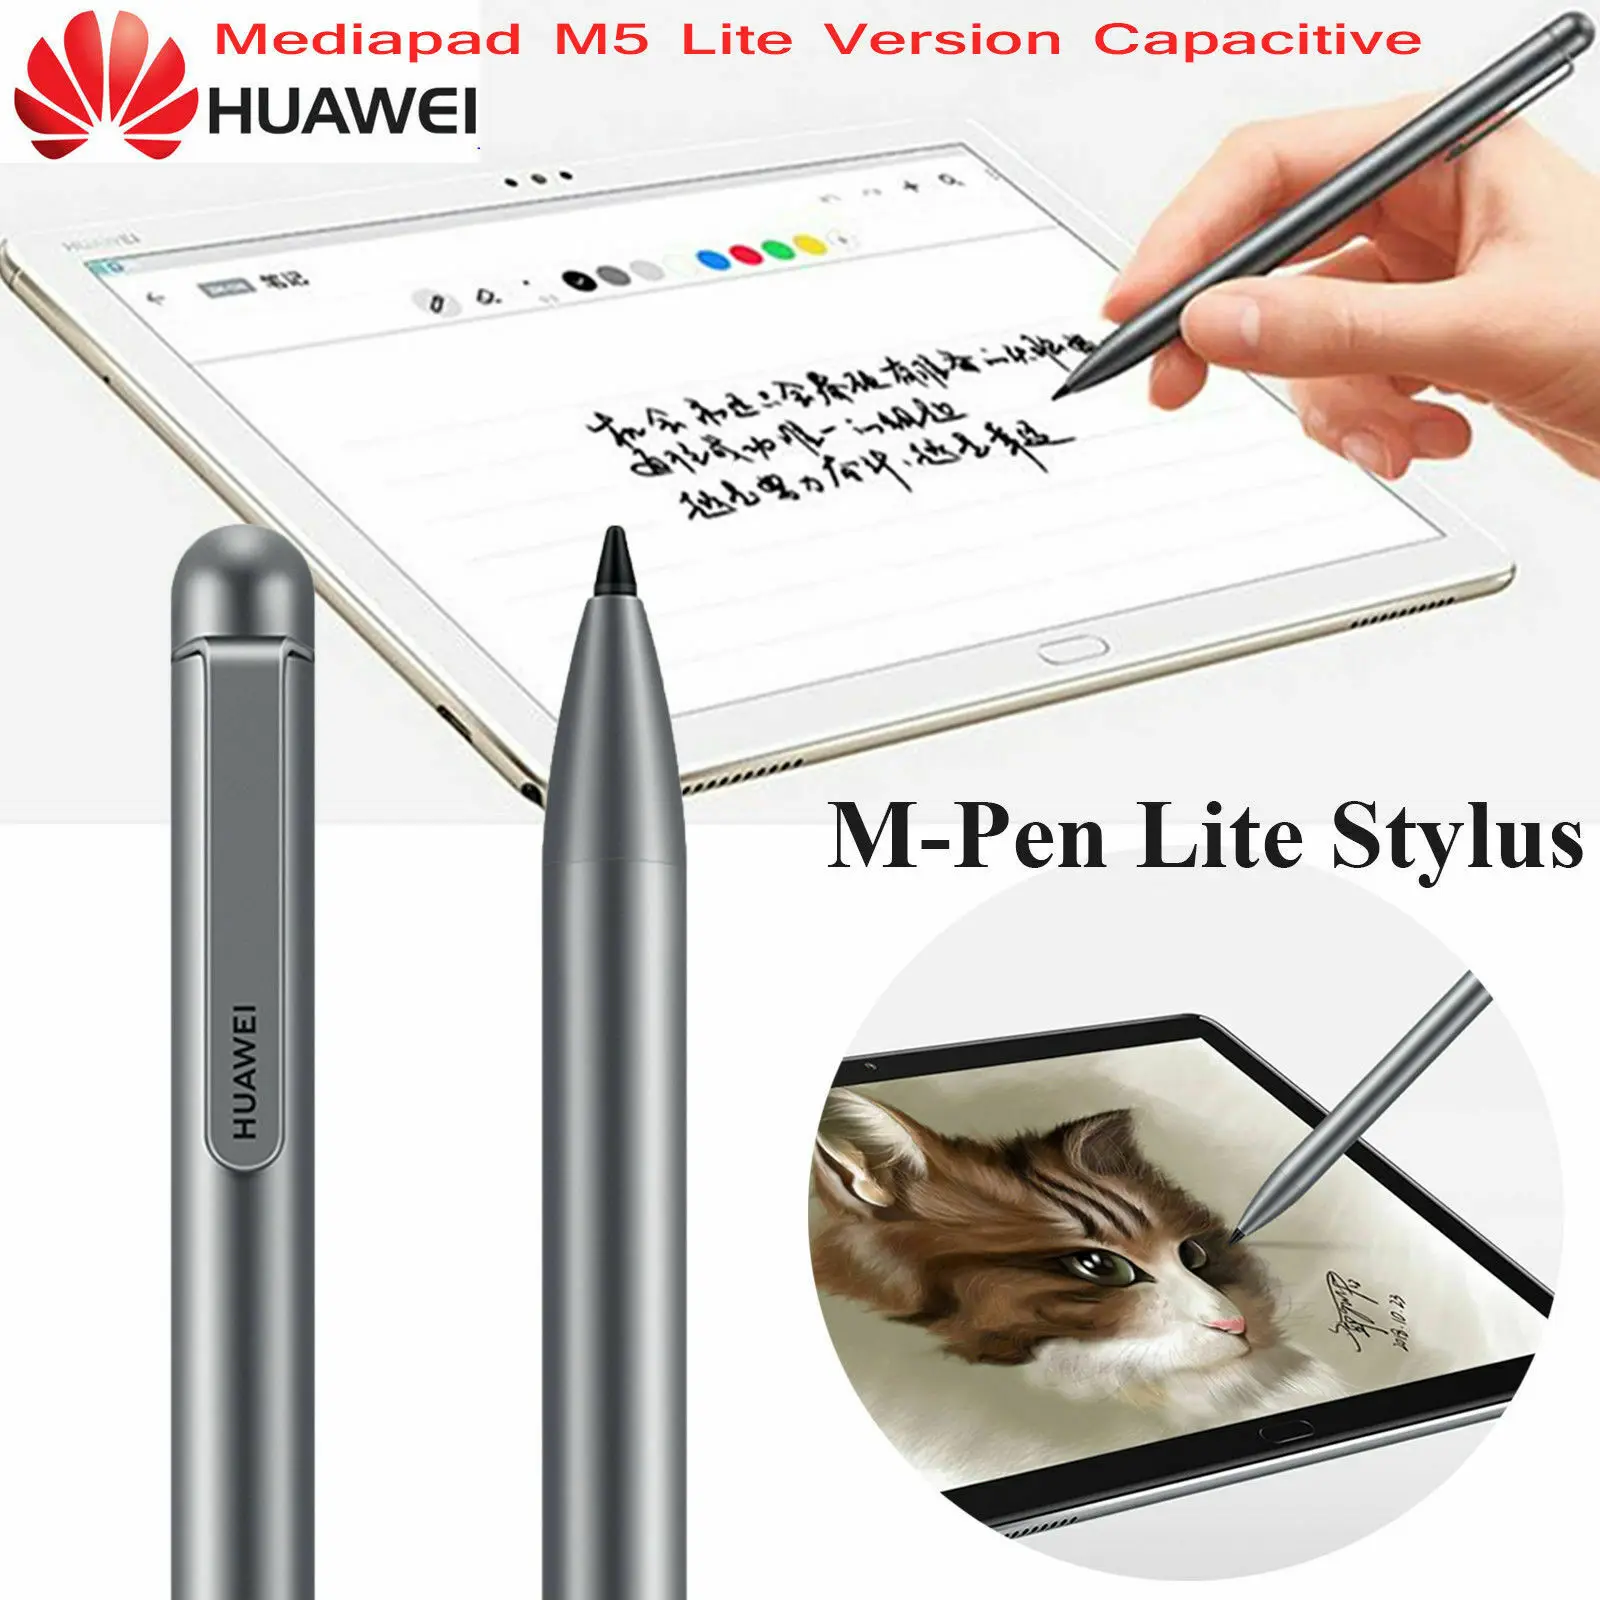 Capacitive Stylus for Mediapad M5 Lite 10 Gray Huawei Creative Capacity Pen